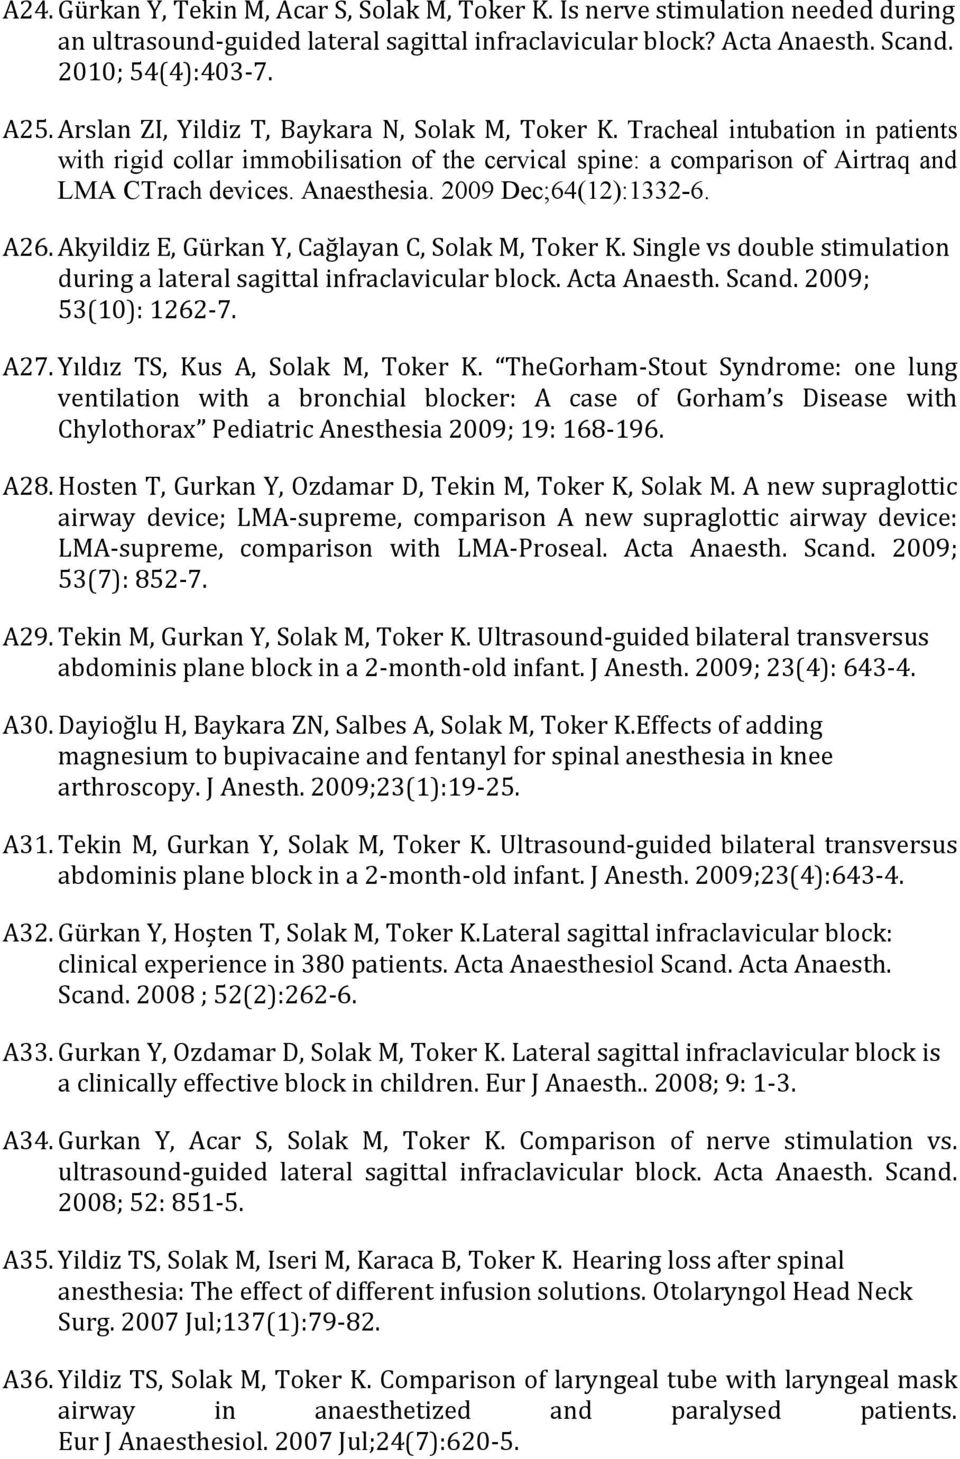 2009 Dec;64(12):1332-6. A26. Akyildiz E, Gürkan Y, Cağlayan C, Solak M, Toker K. Single vs double stimulation during a lateral sagittal infraclavicular block. Acta Anaesth. Scand.